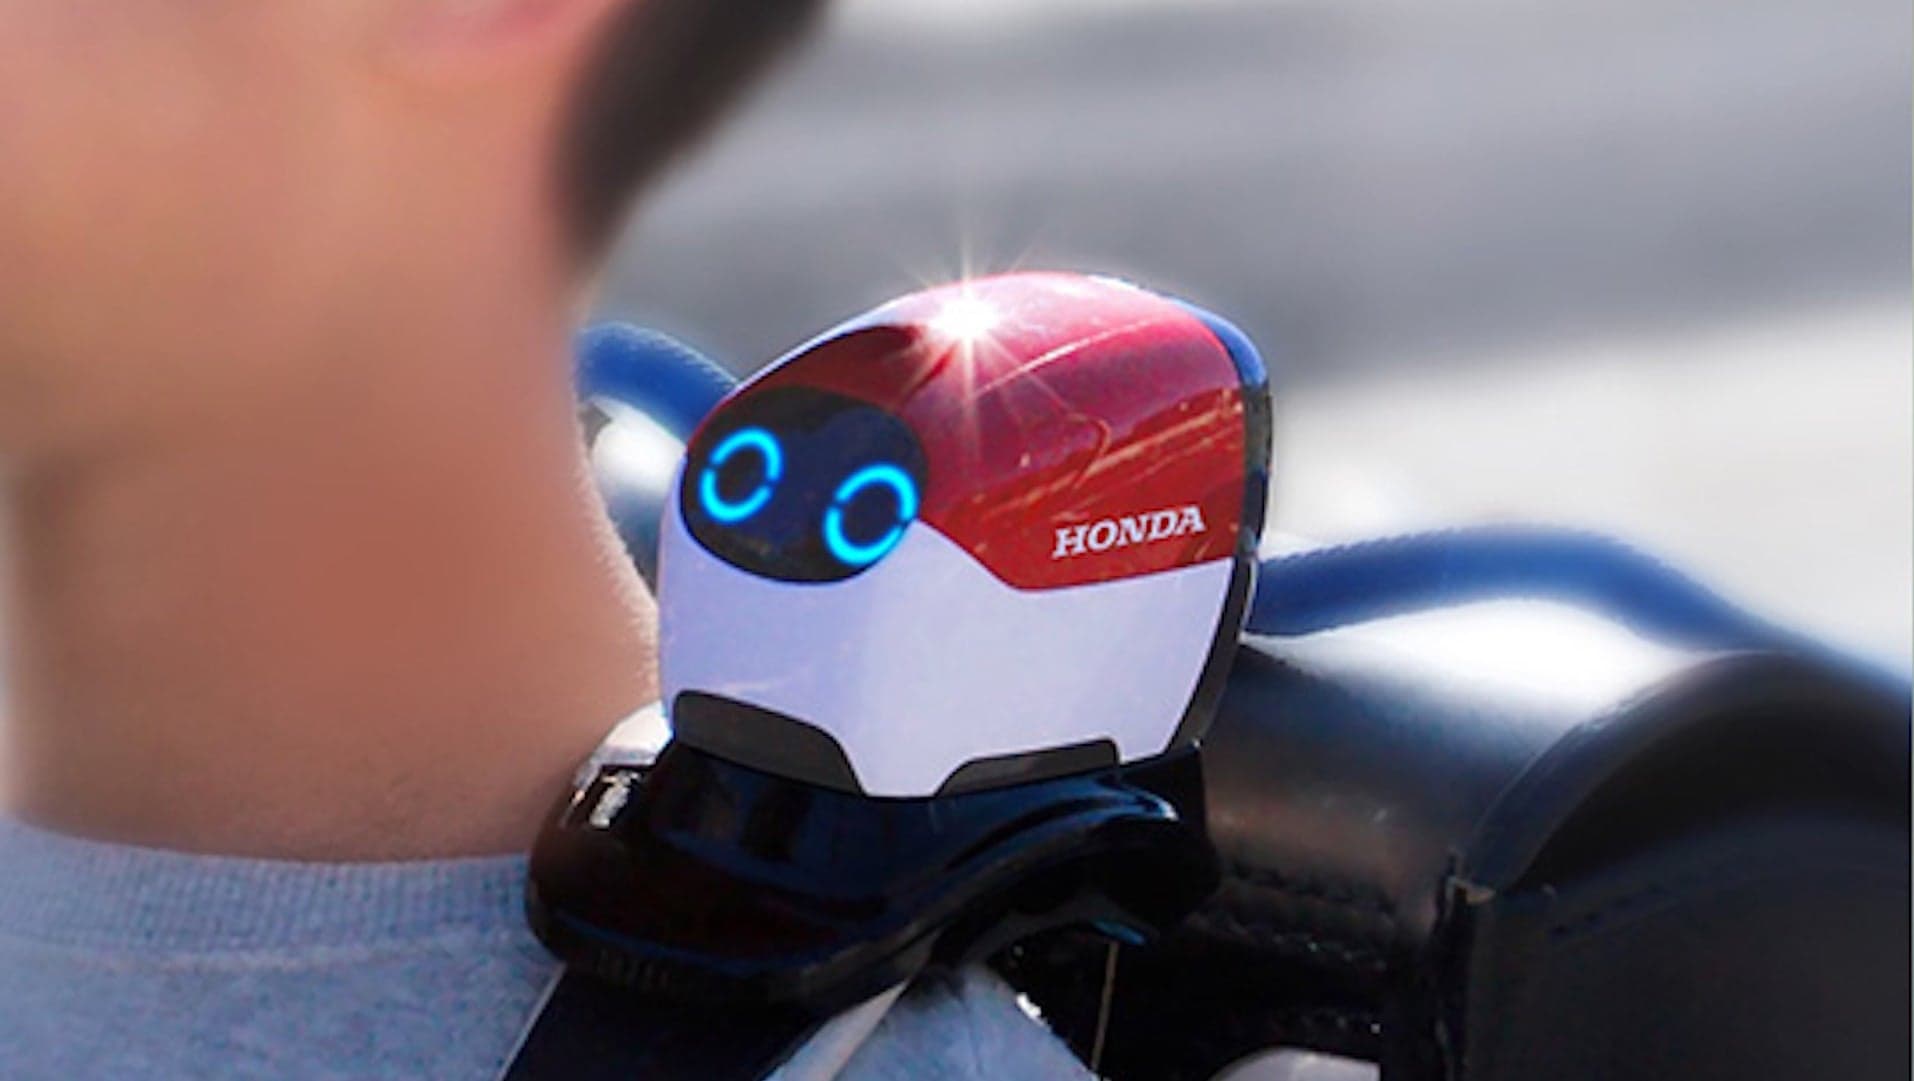 Honda’s New Robot Buddy Helps Kids Cross Streets Safely